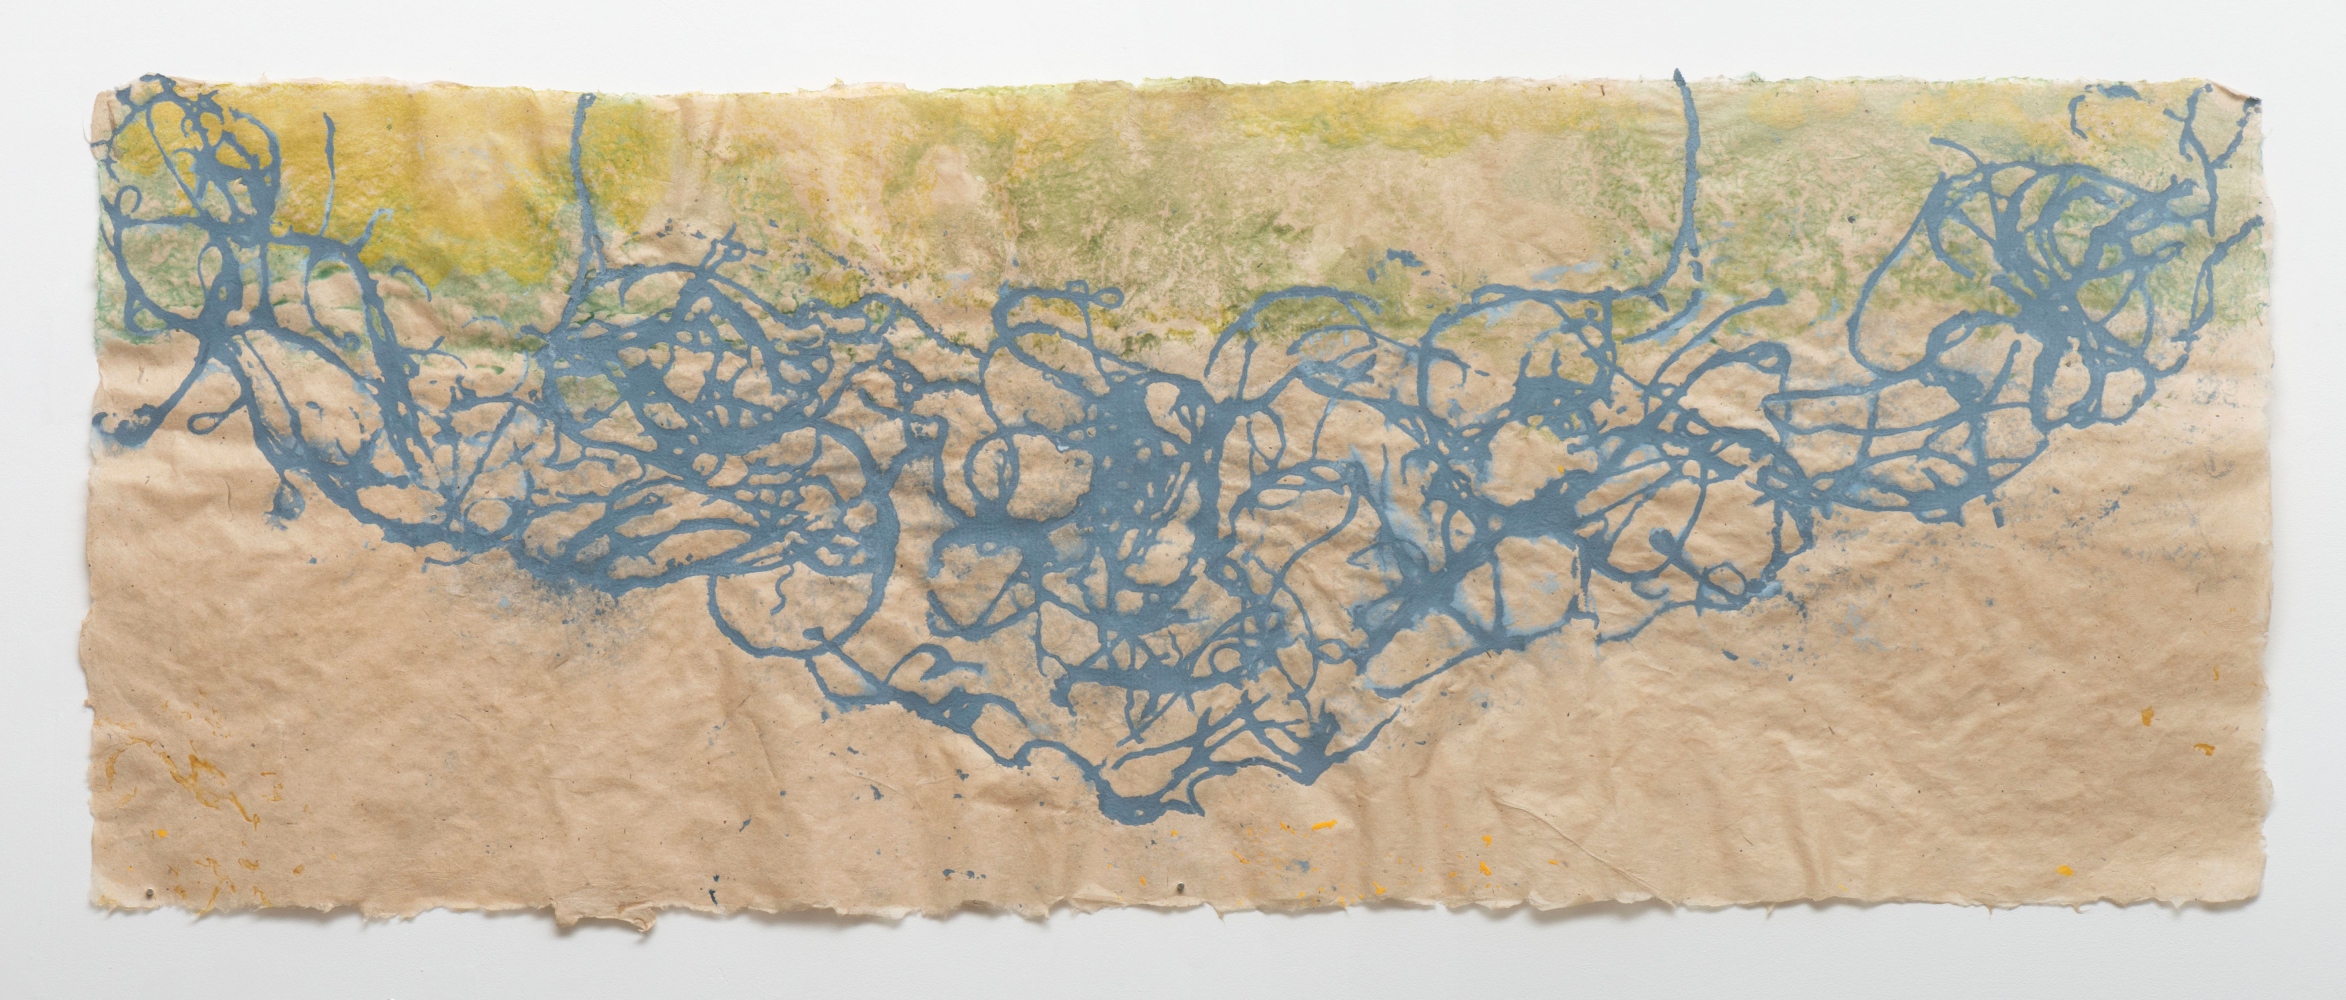 curvy blue lines crisscrossing tan colored paper